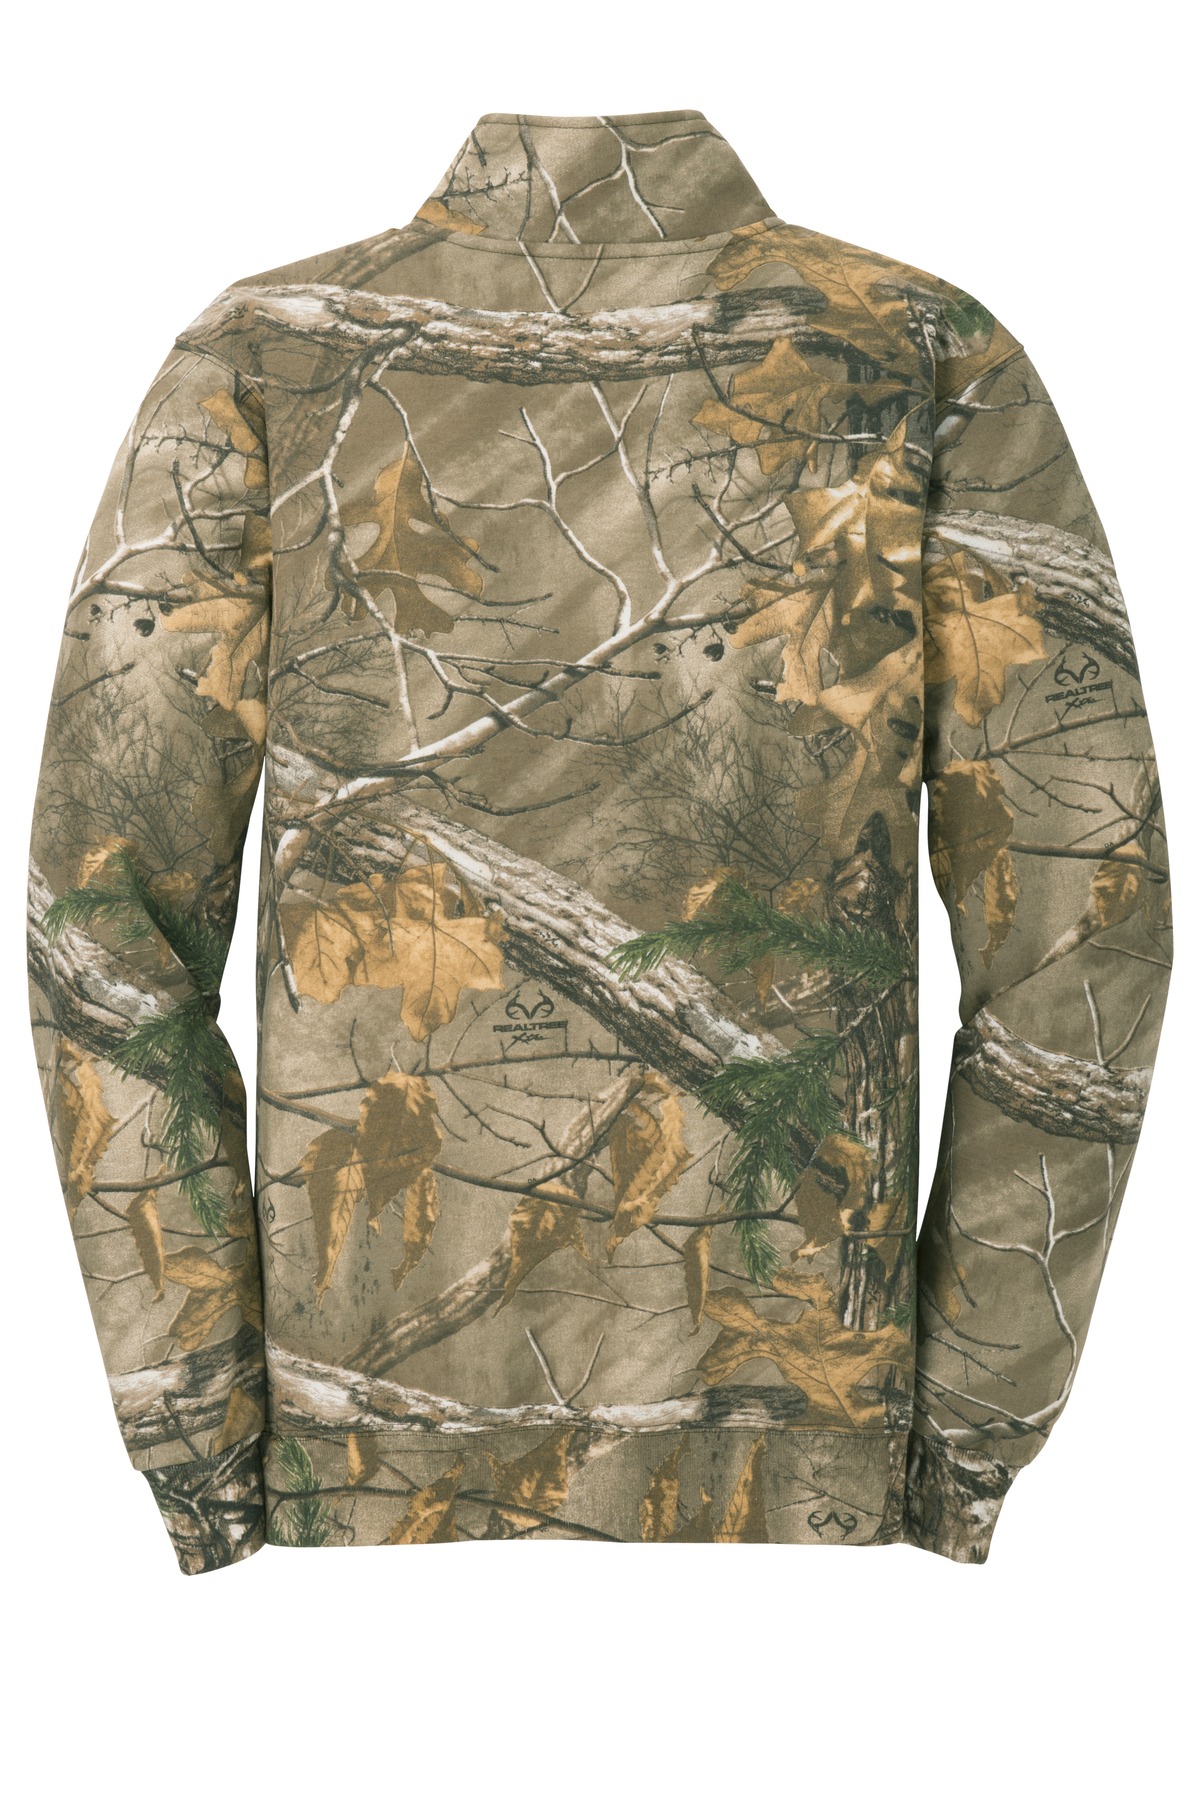 Russell Outdoors ™ Realtree ® 1/4-Zip Sweatshirt. RO78Q - Custom Shirt Shop